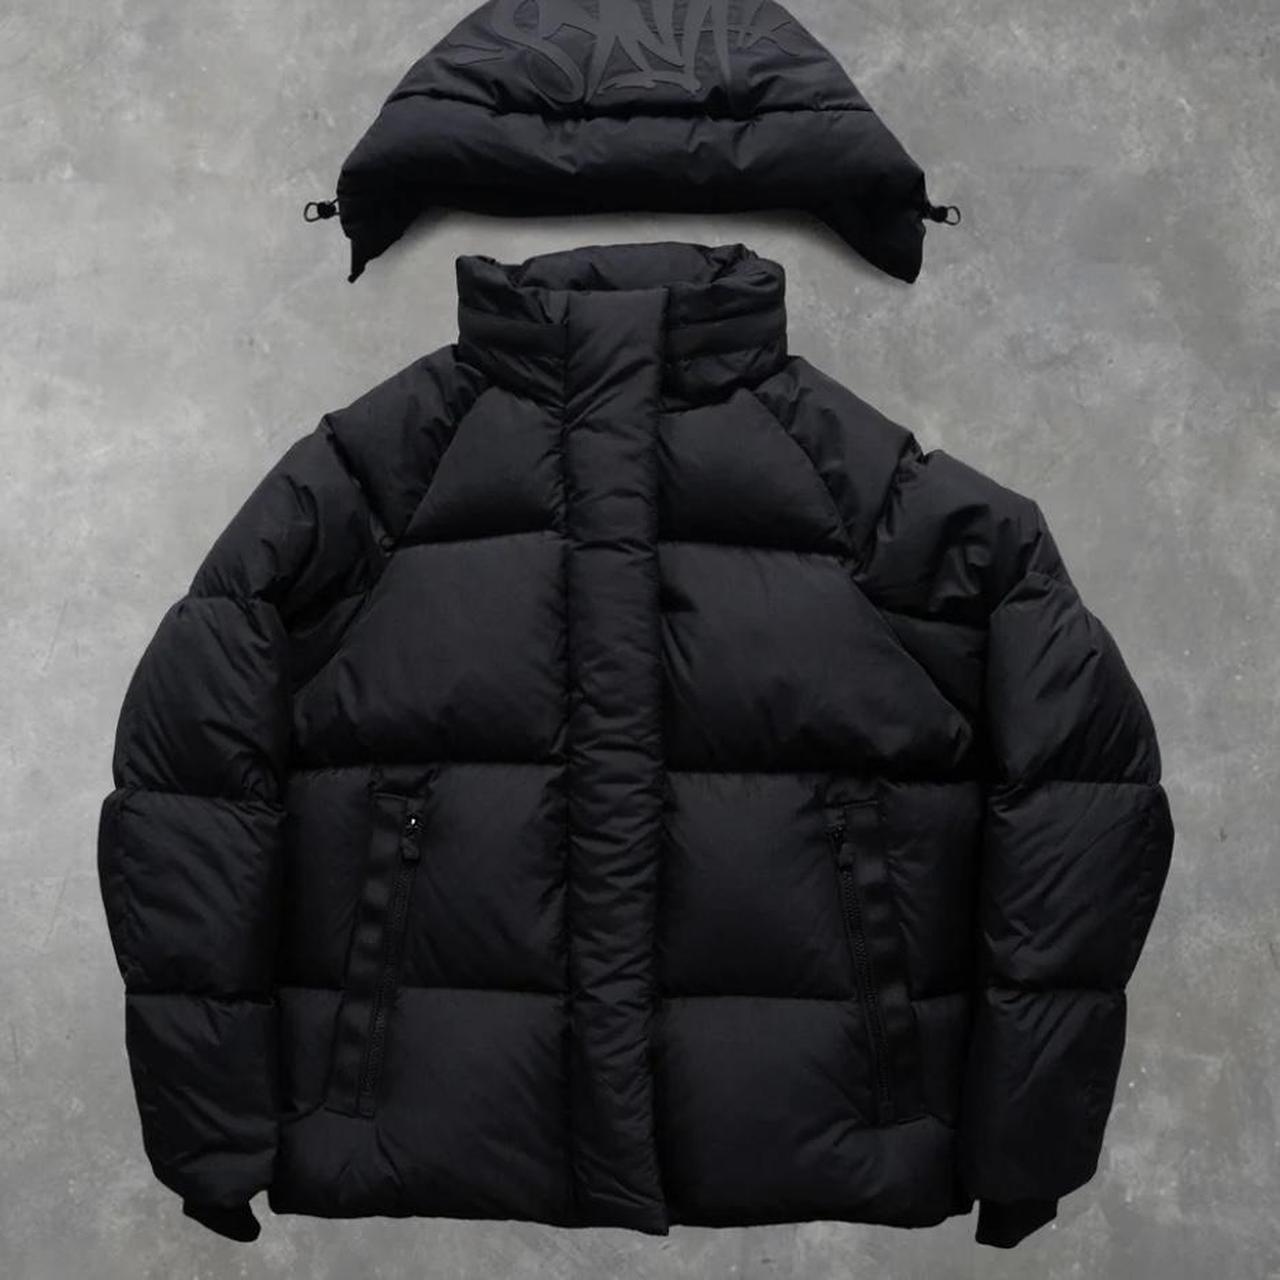 Syna world jacket Size medium Brand new Black Open... - Depop